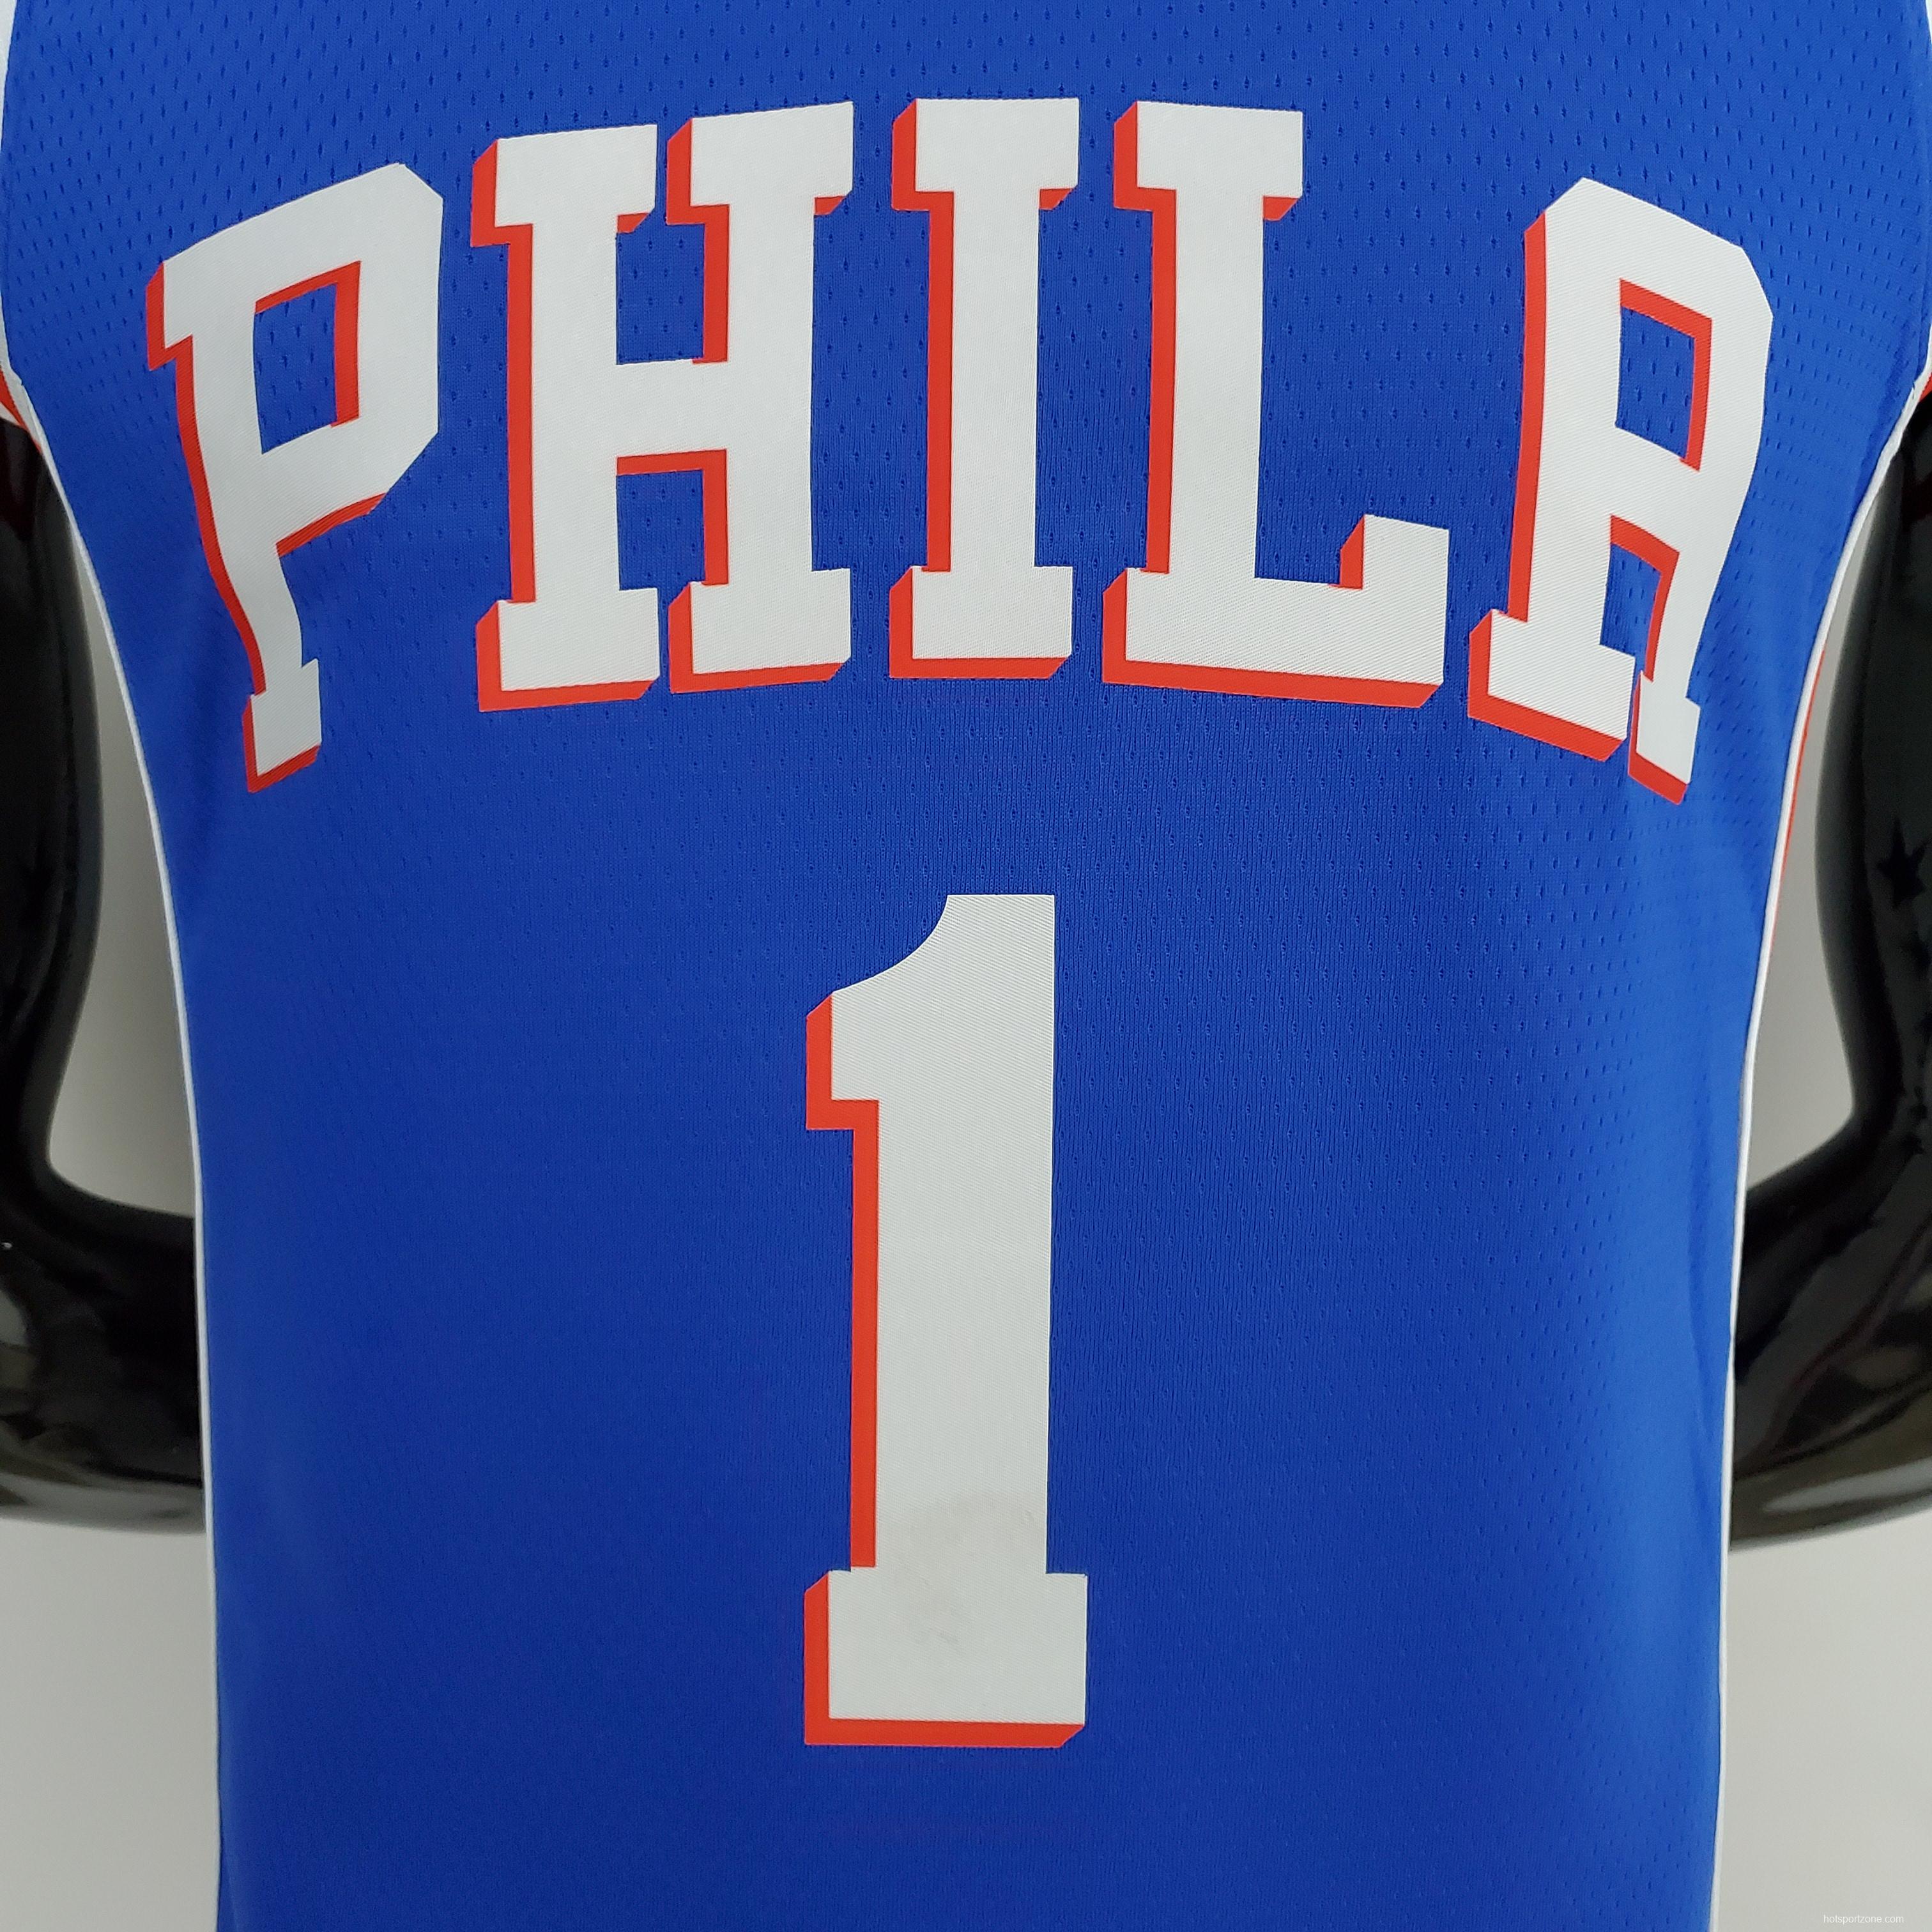 75th Anniversary Philadelphia 76ers HARDEN#1 Blue NBA Jersey